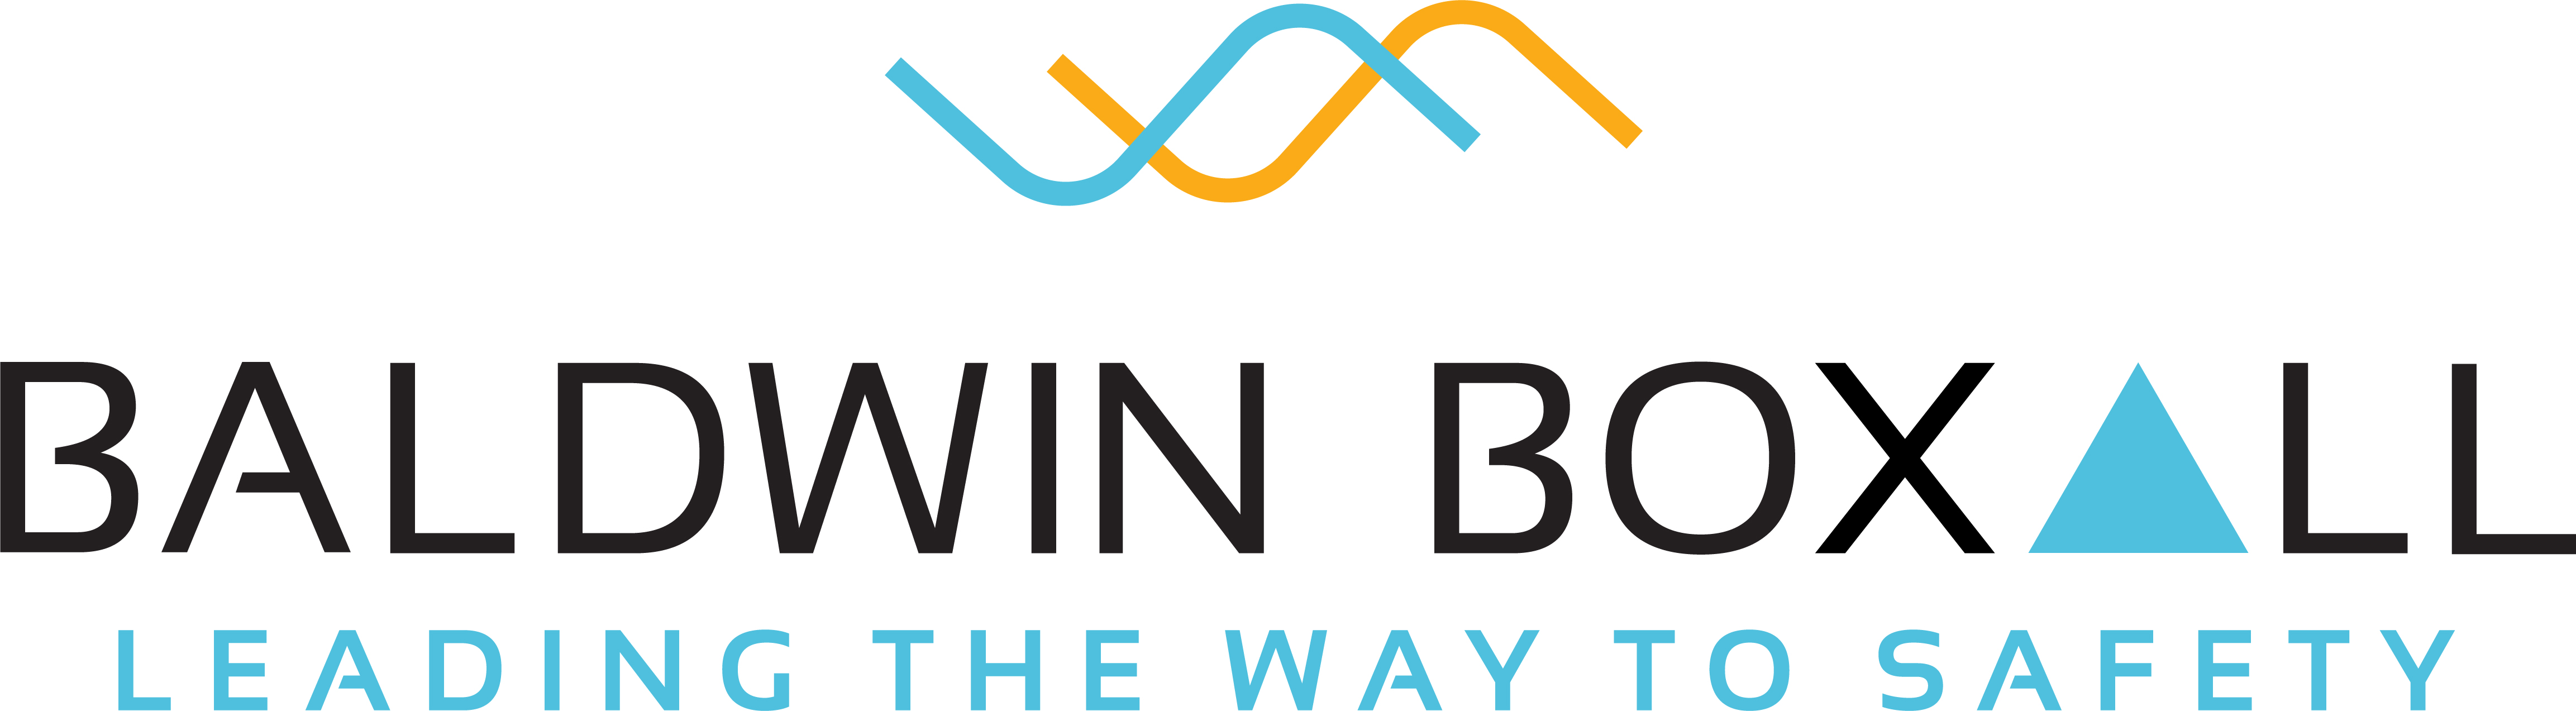 logo for Baldwin Boxall Communications Limited